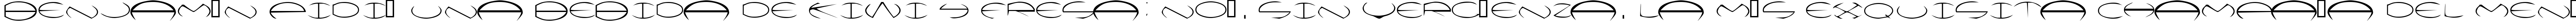 Пример написания шрифтом Victor текста на испанском